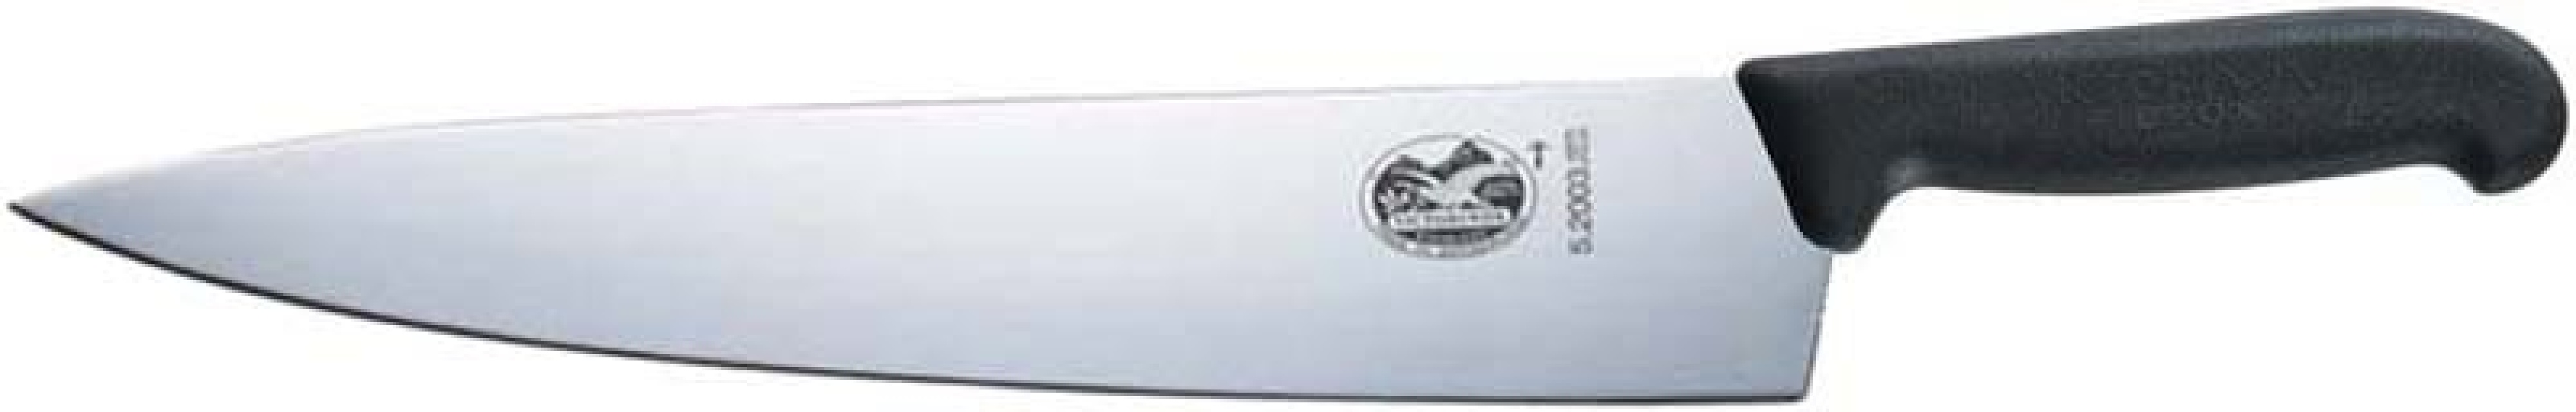 Kokkekniv Victorinox 31 cm / fibroxskaft